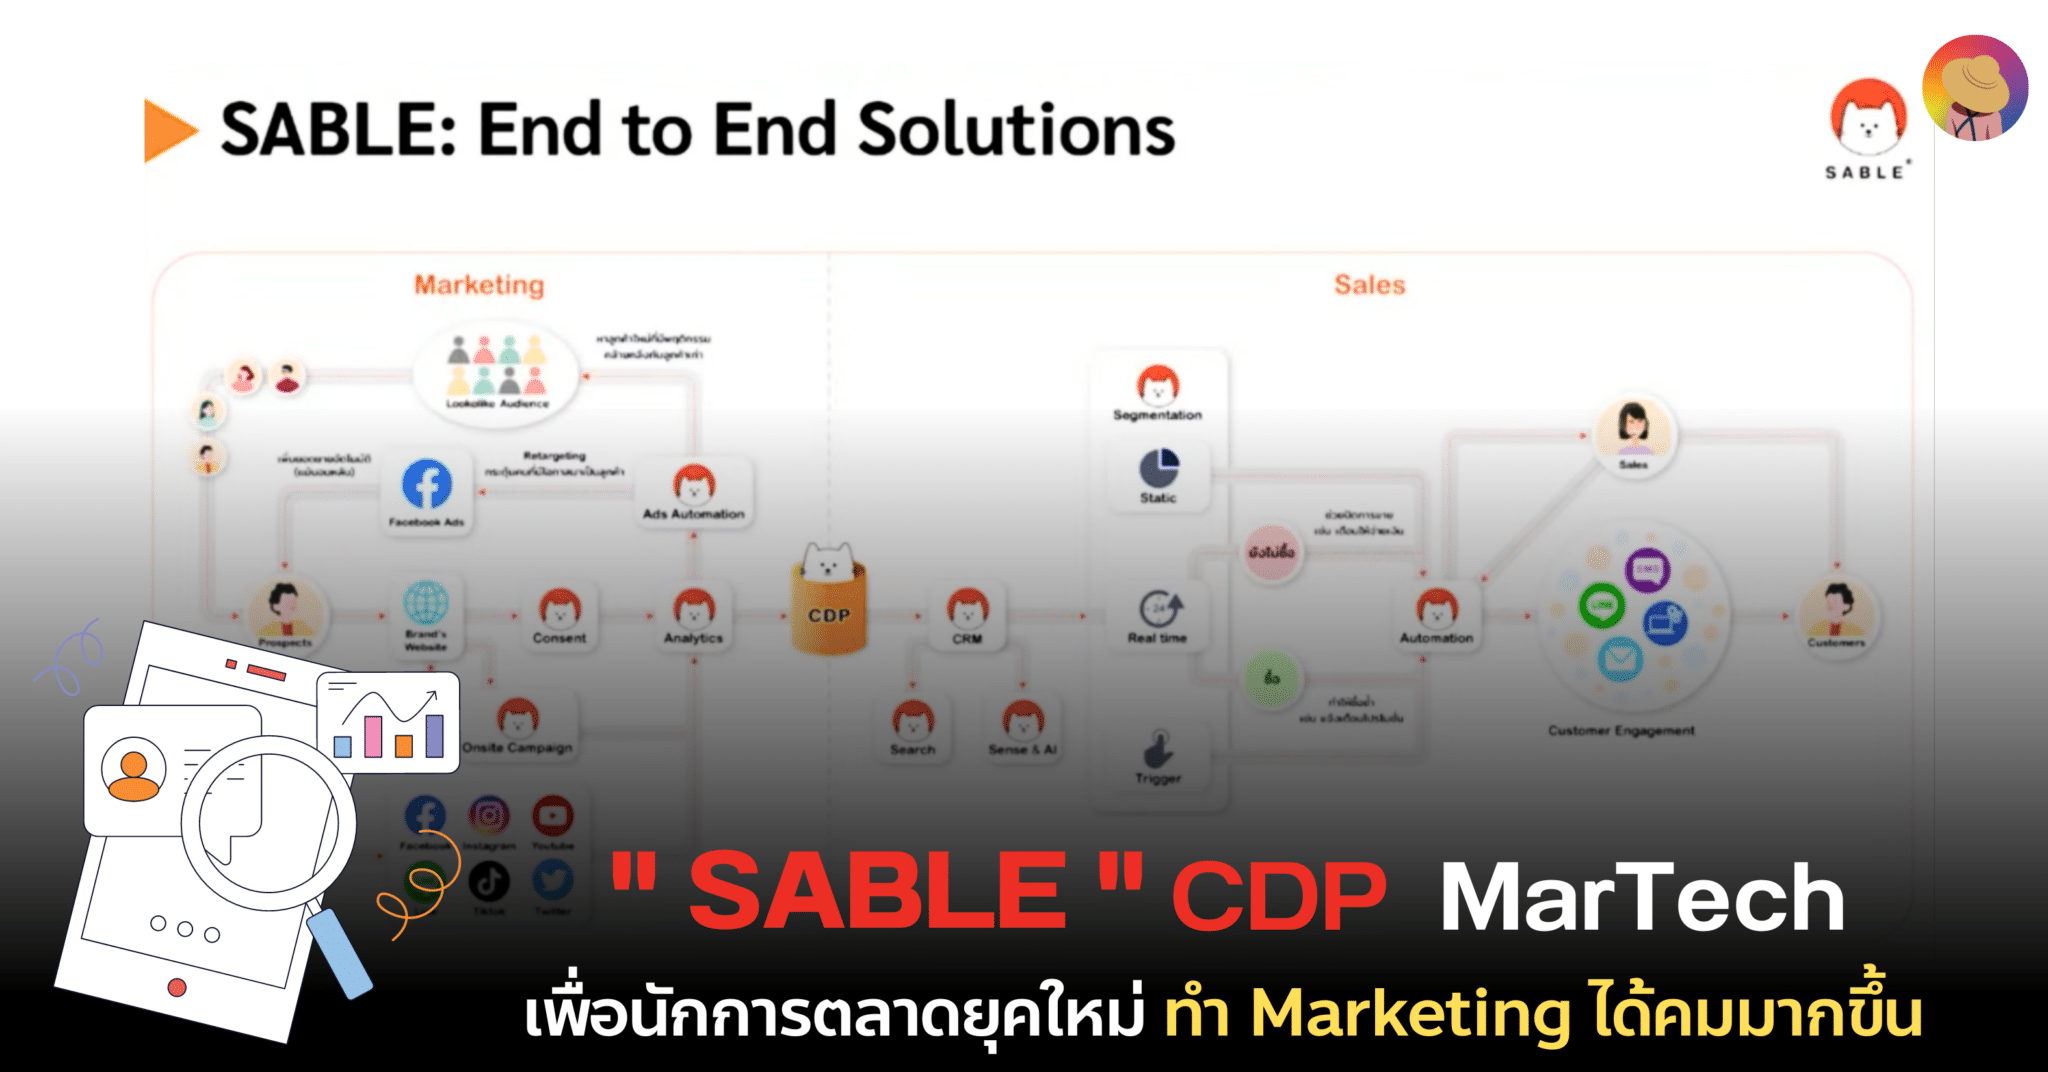 SABLE CDP MarTech เพื่อนักการตลาดยุคใหม่ ทำ Marketing ได้คมมากขึ้น